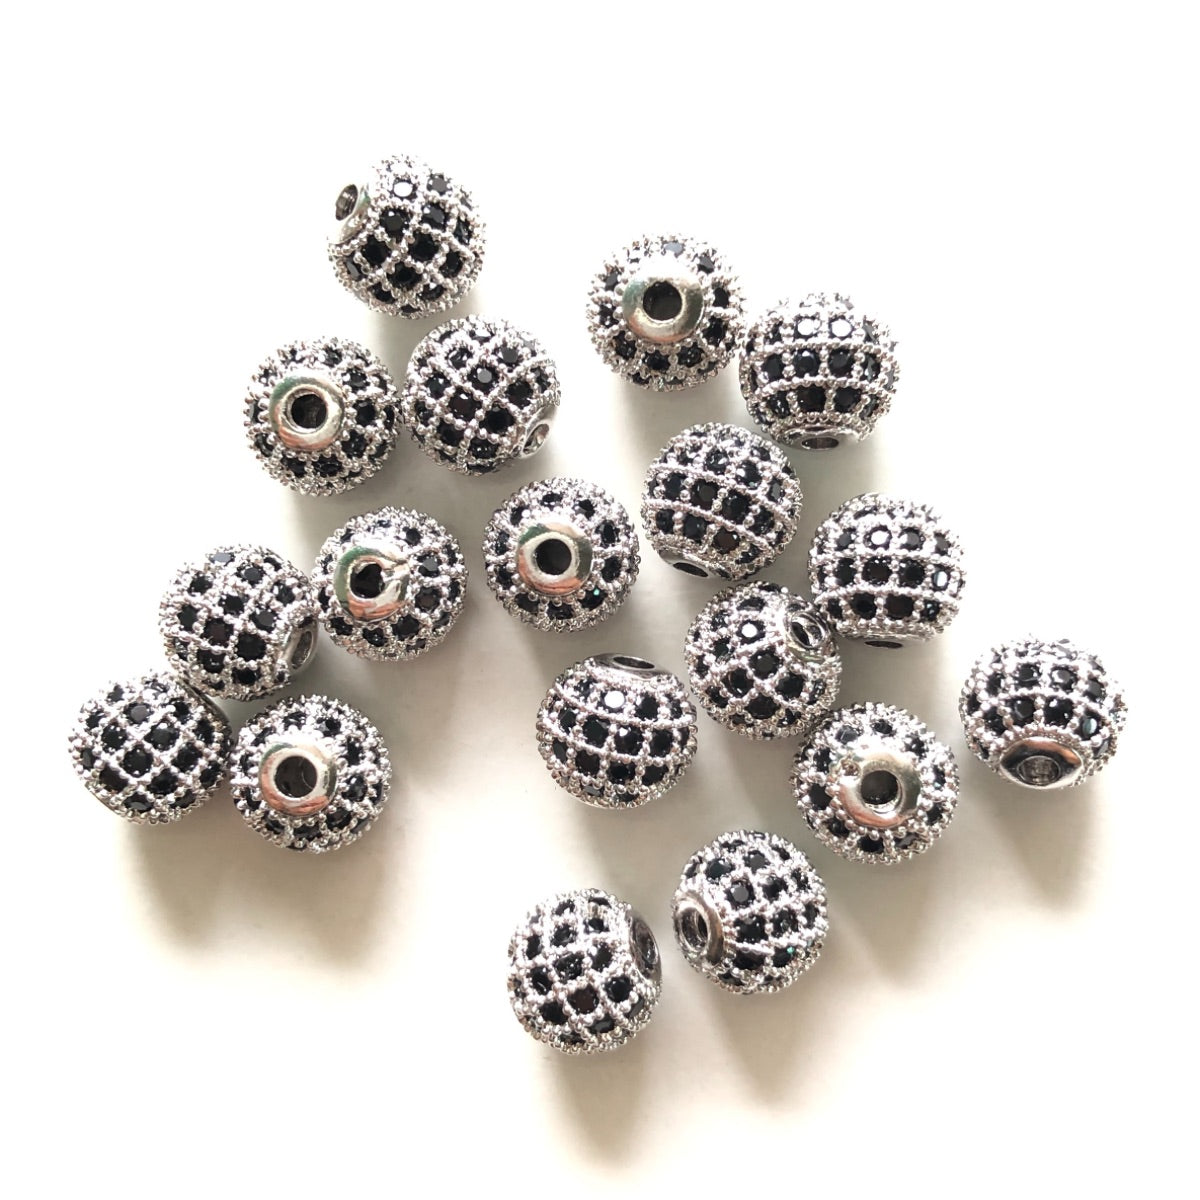 20pcs/lot 8mm Black CZ Paved Ball Spacers Silver CZ Paved Spacers 8mm Beads Ball Beads Charms Beads Beyond